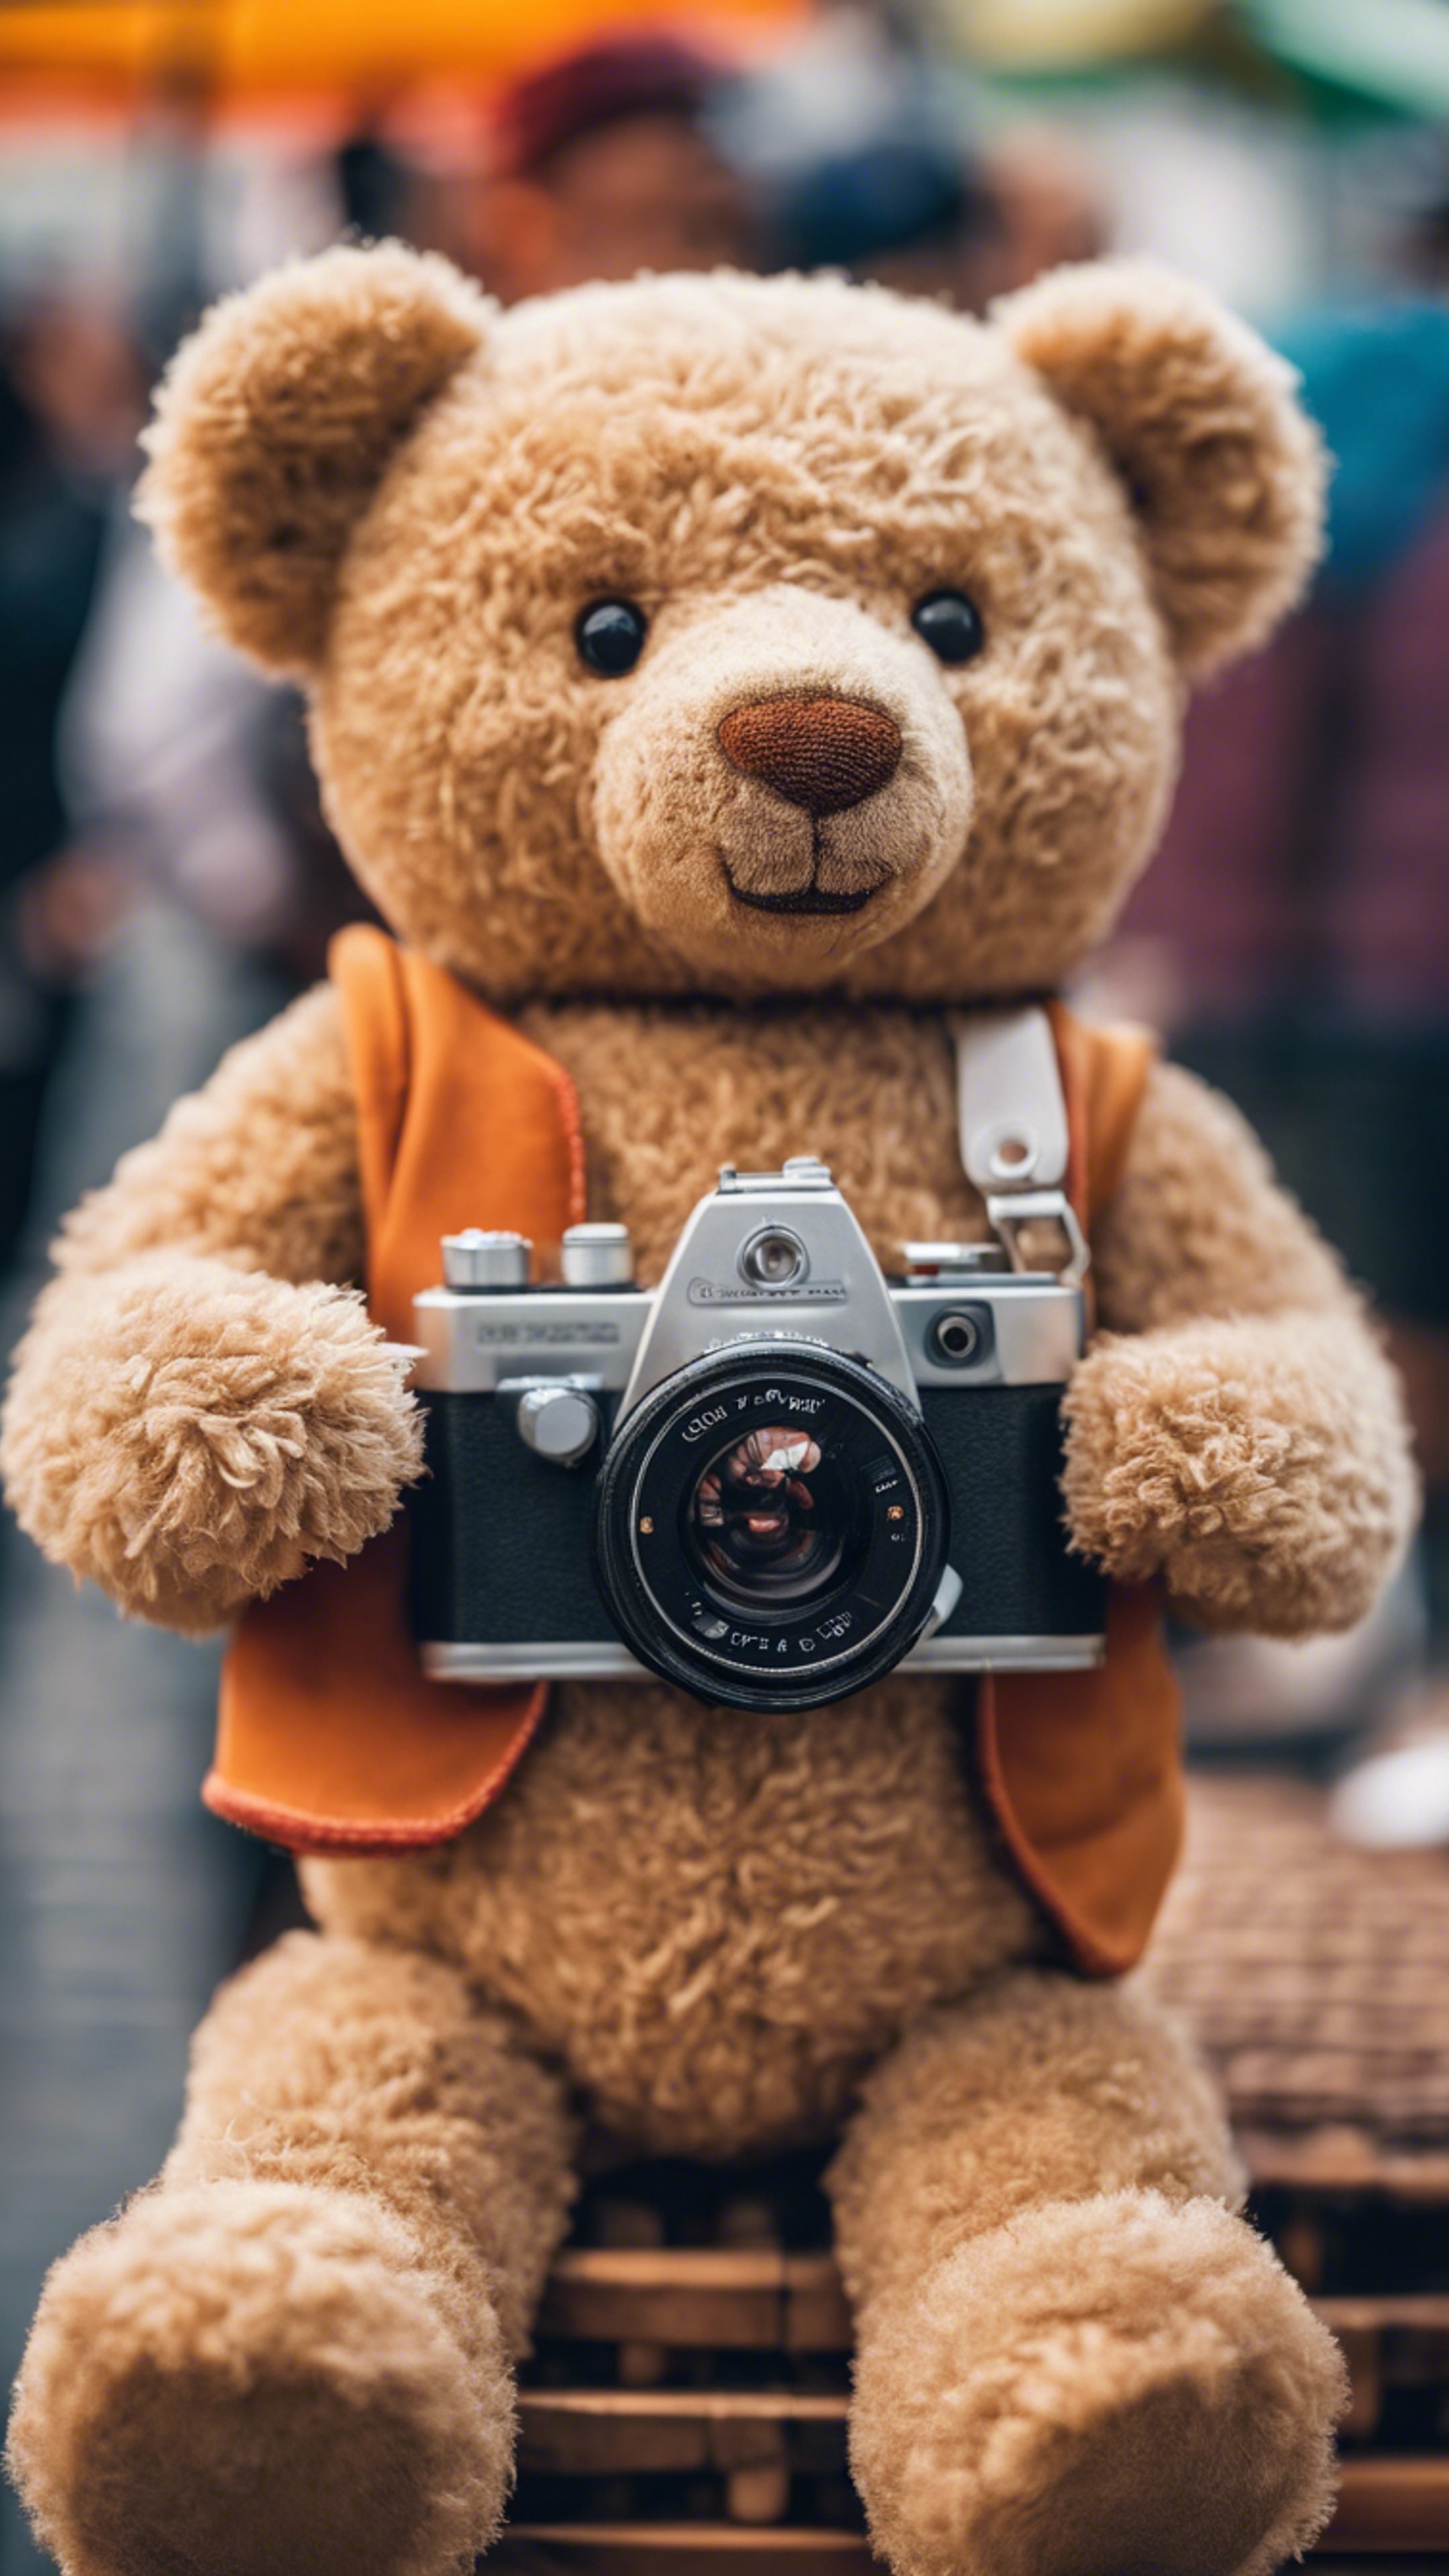 A teddy bear photography hobbyist, holding a toy camera, stood amidst a vibrant street fair. Sfondo[6bbb7c06ef4c4008bbb6]